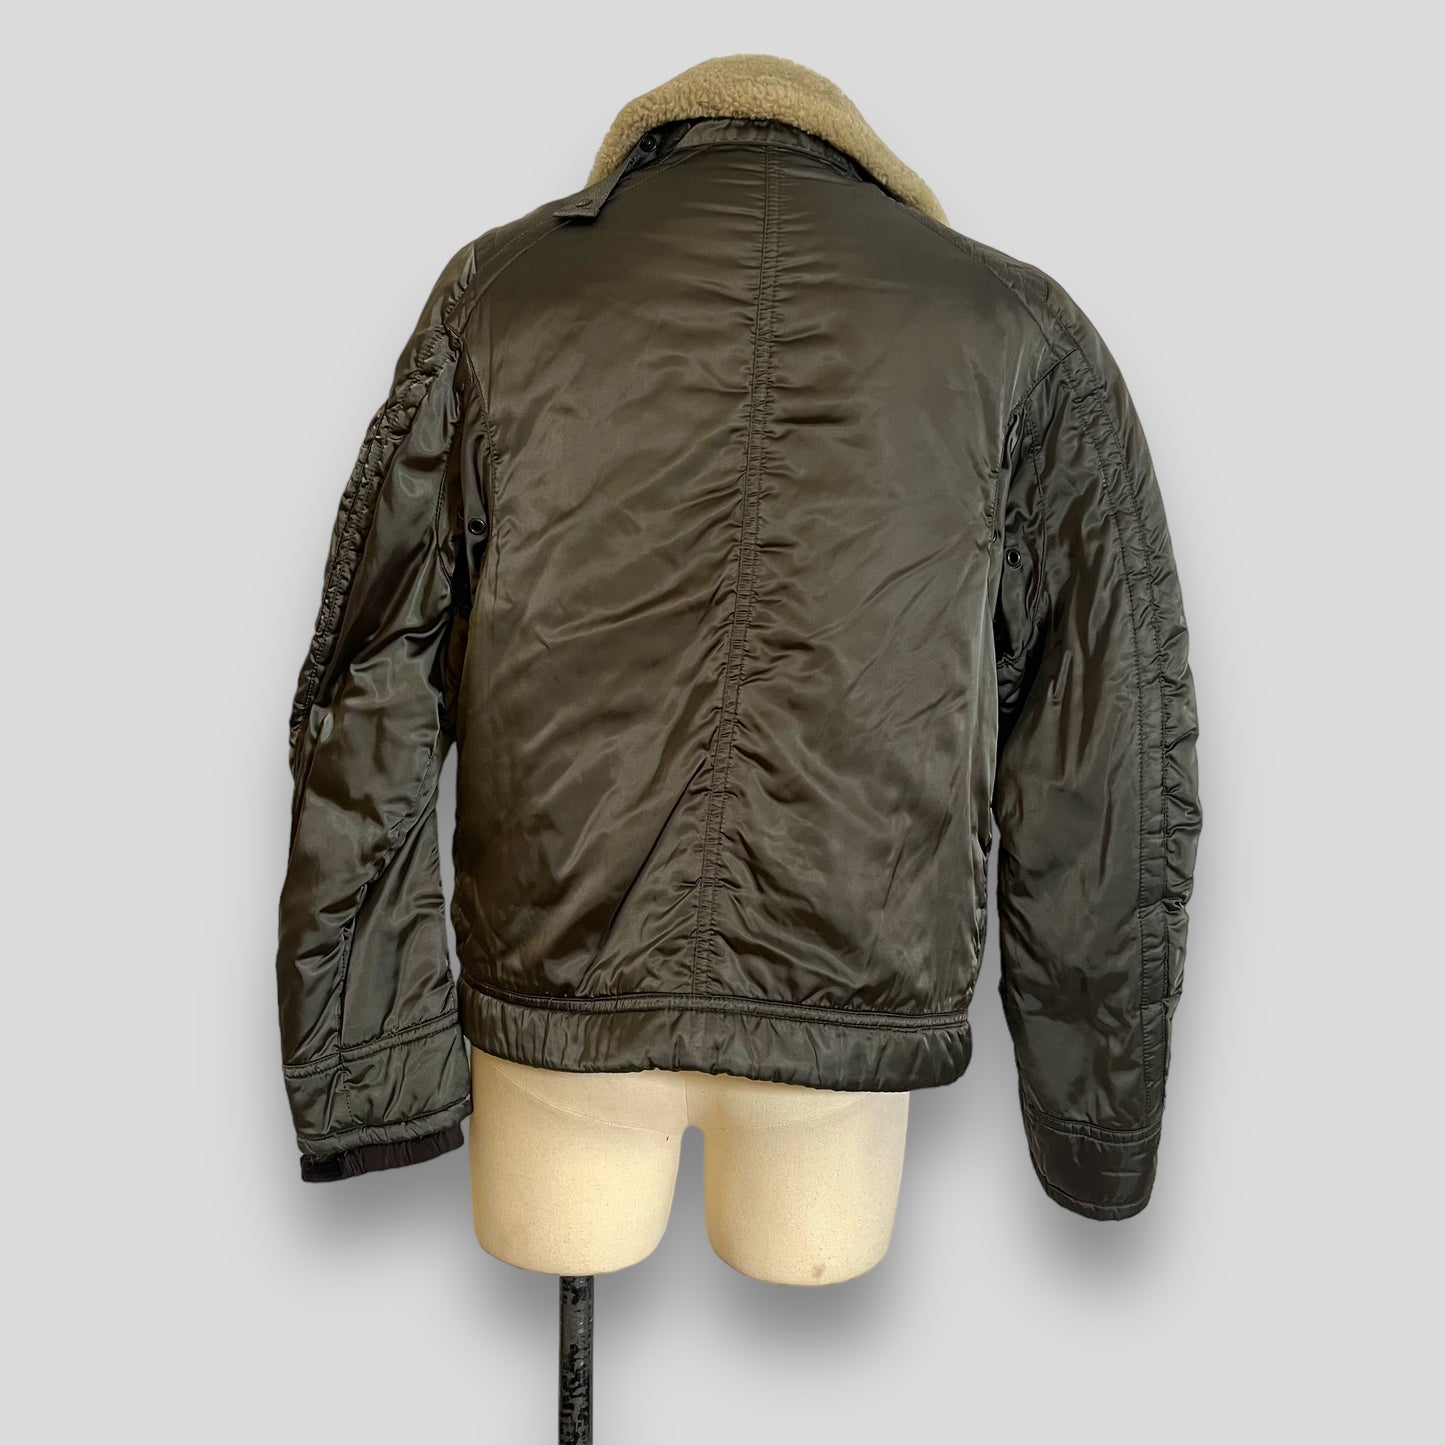 00’s Prada bomber jacket